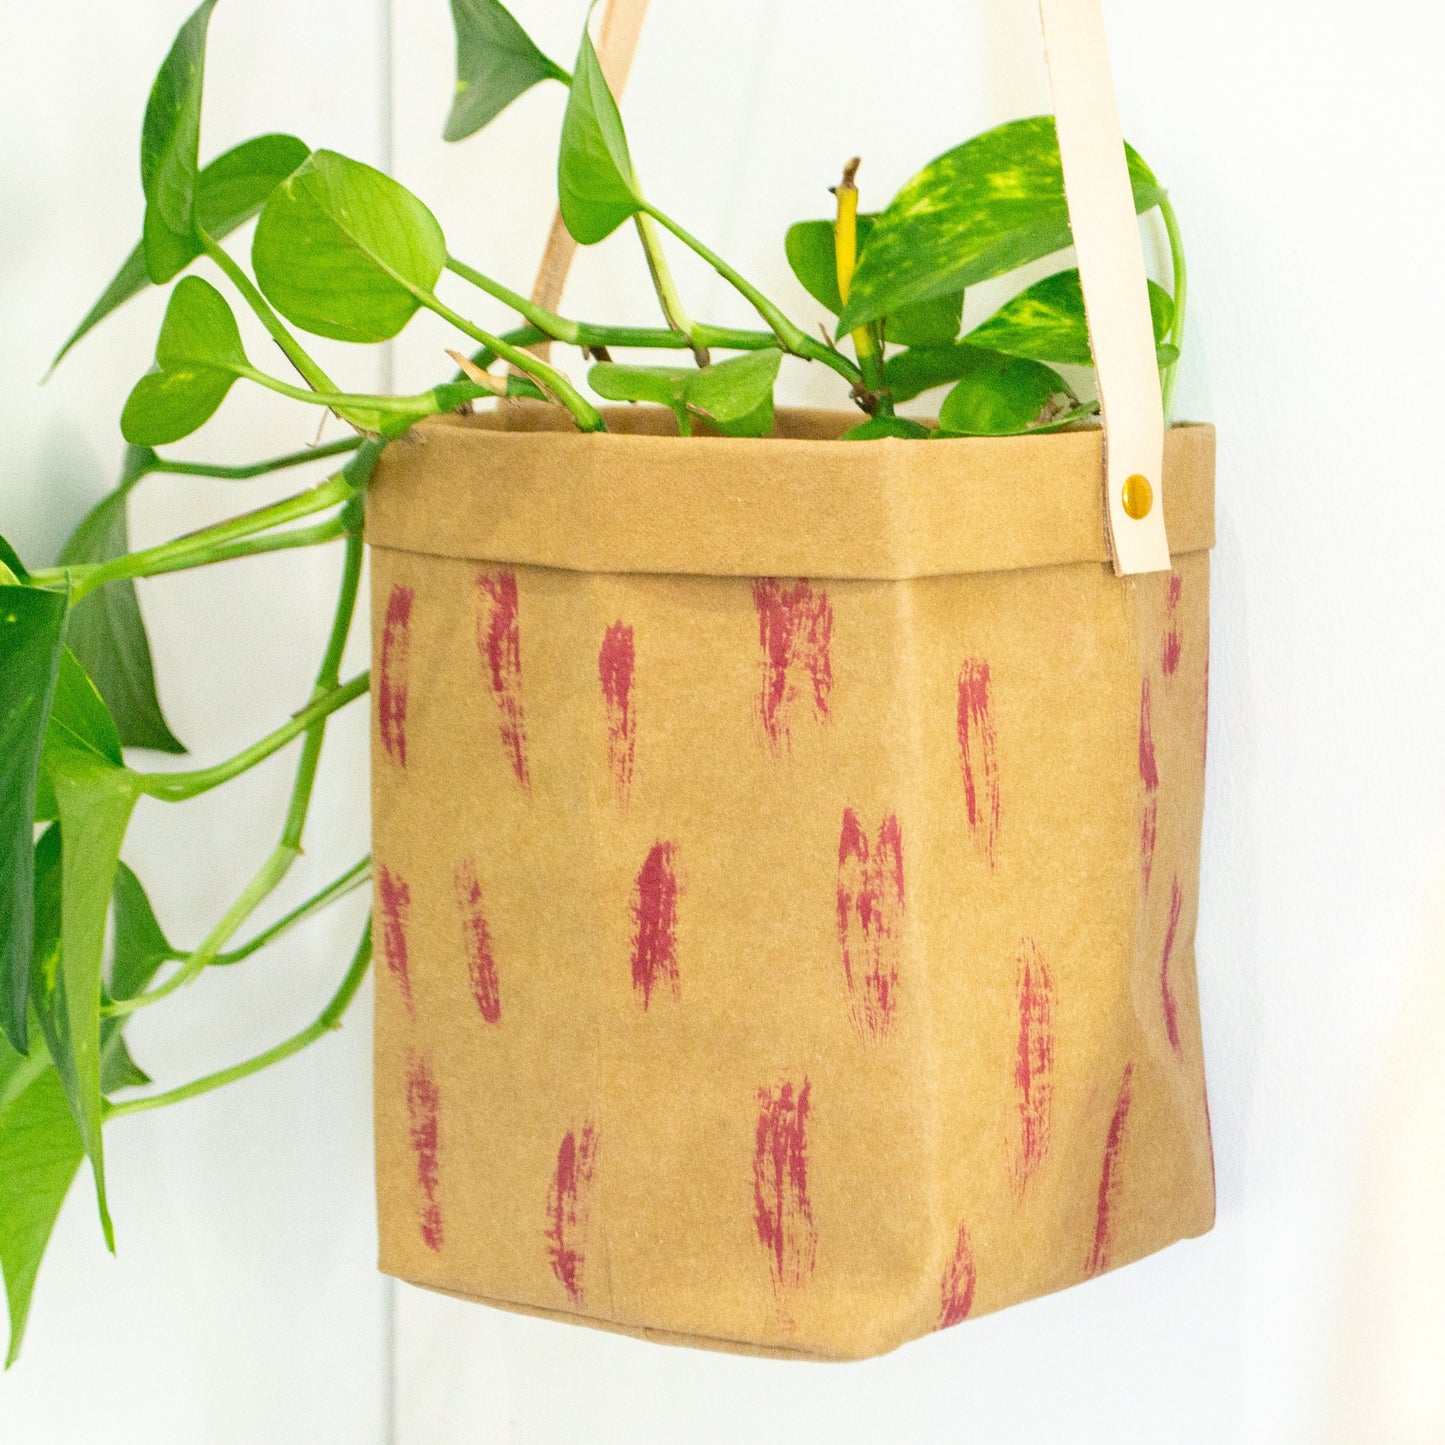 Hand painted Hanging paper planter, hanging storage pod